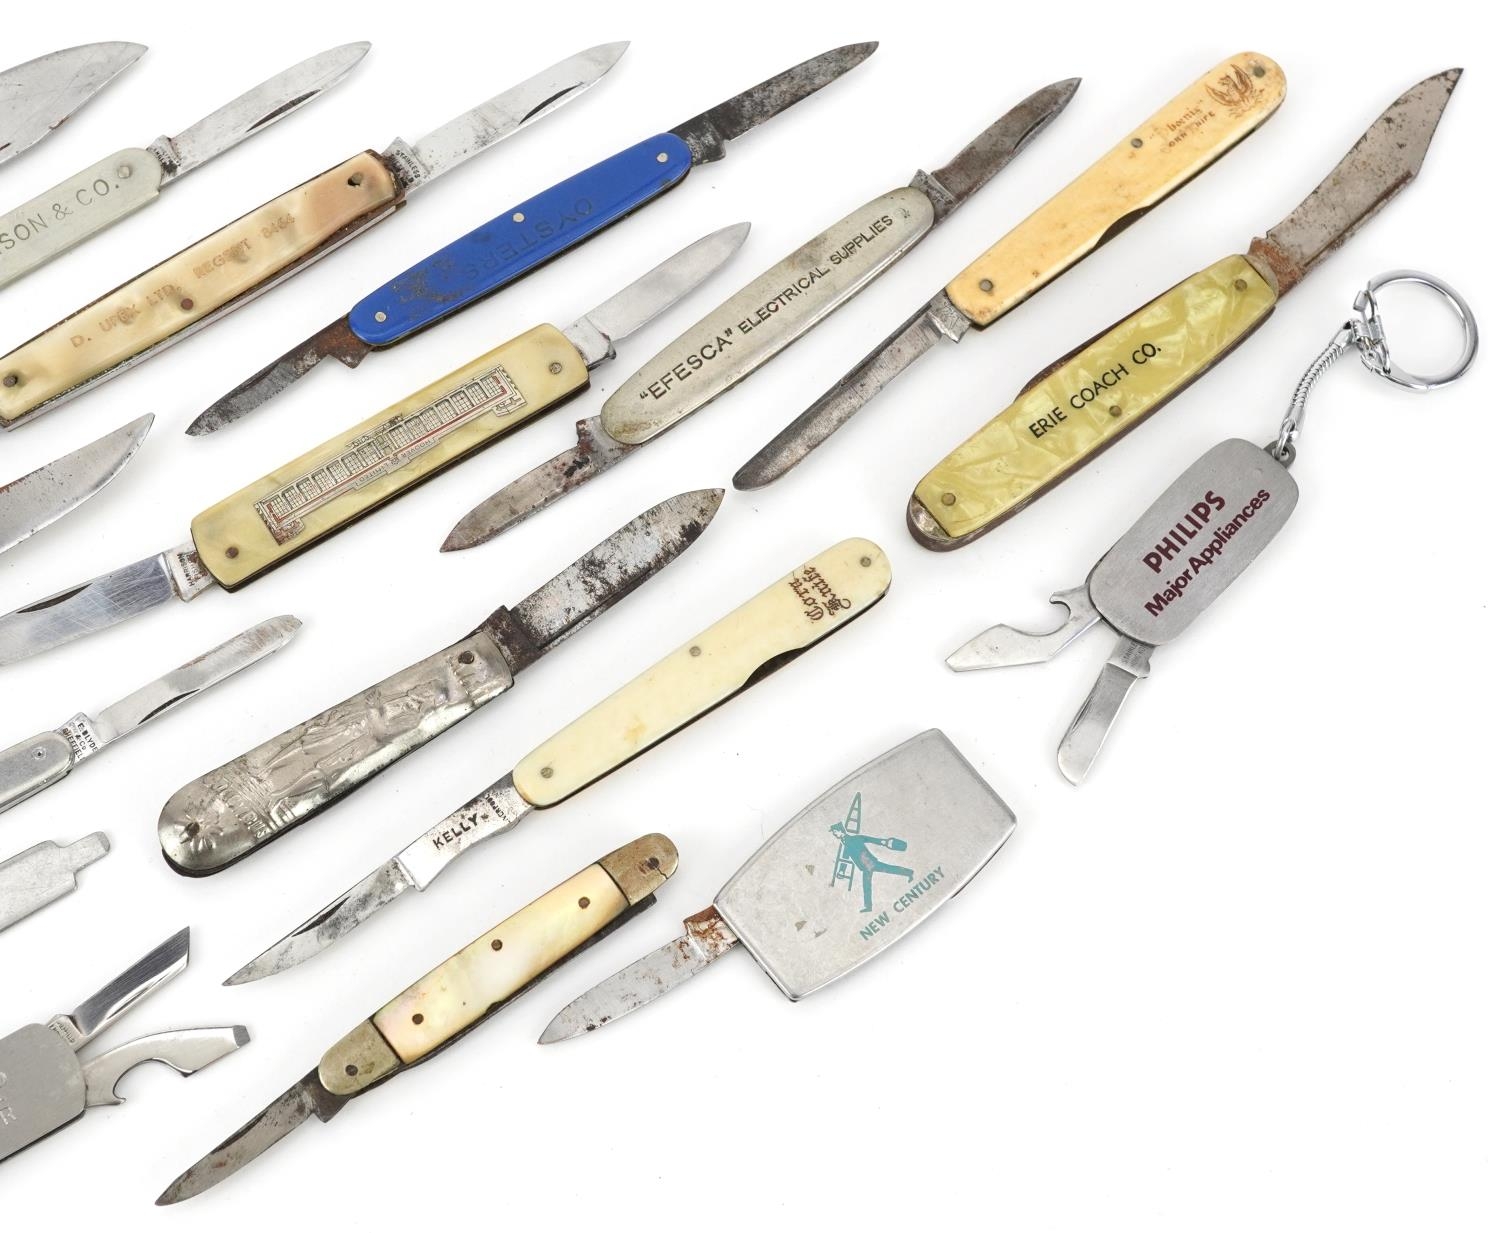 Collection of vintage advertising penknives and pocket tools, including Hoover Ltd, Sandvik, Harp - Image 3 of 6